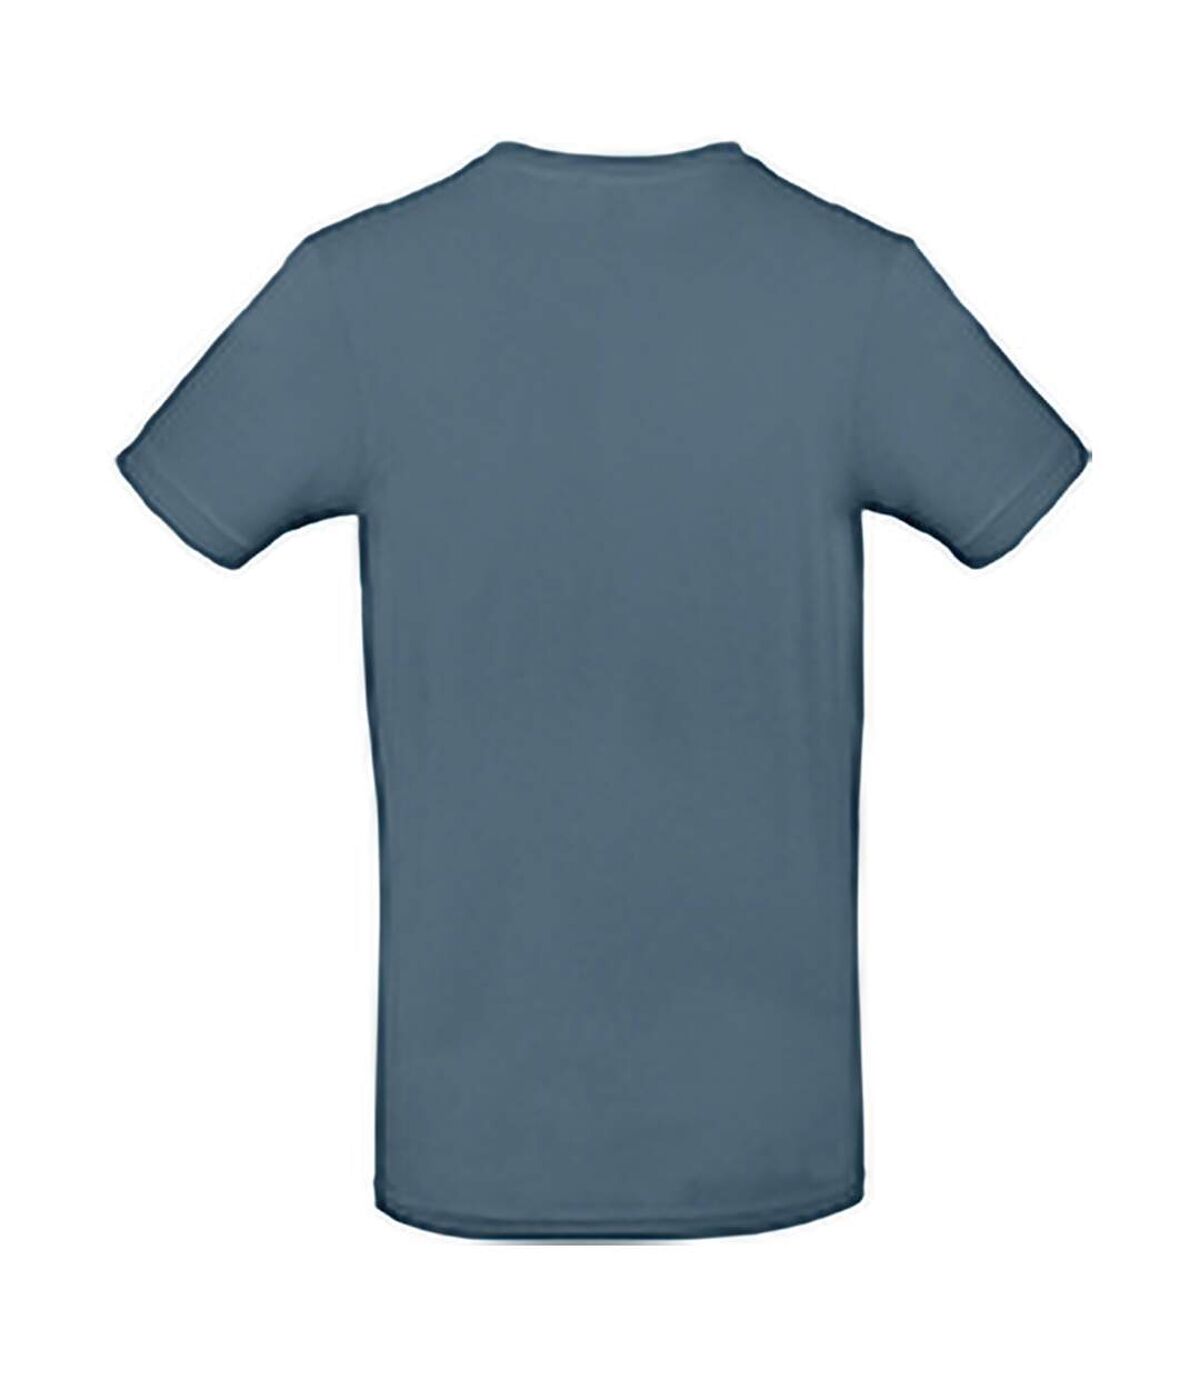 B&C - T-shirt manches courtes - Homme (Bleu charron) - UTBC3911